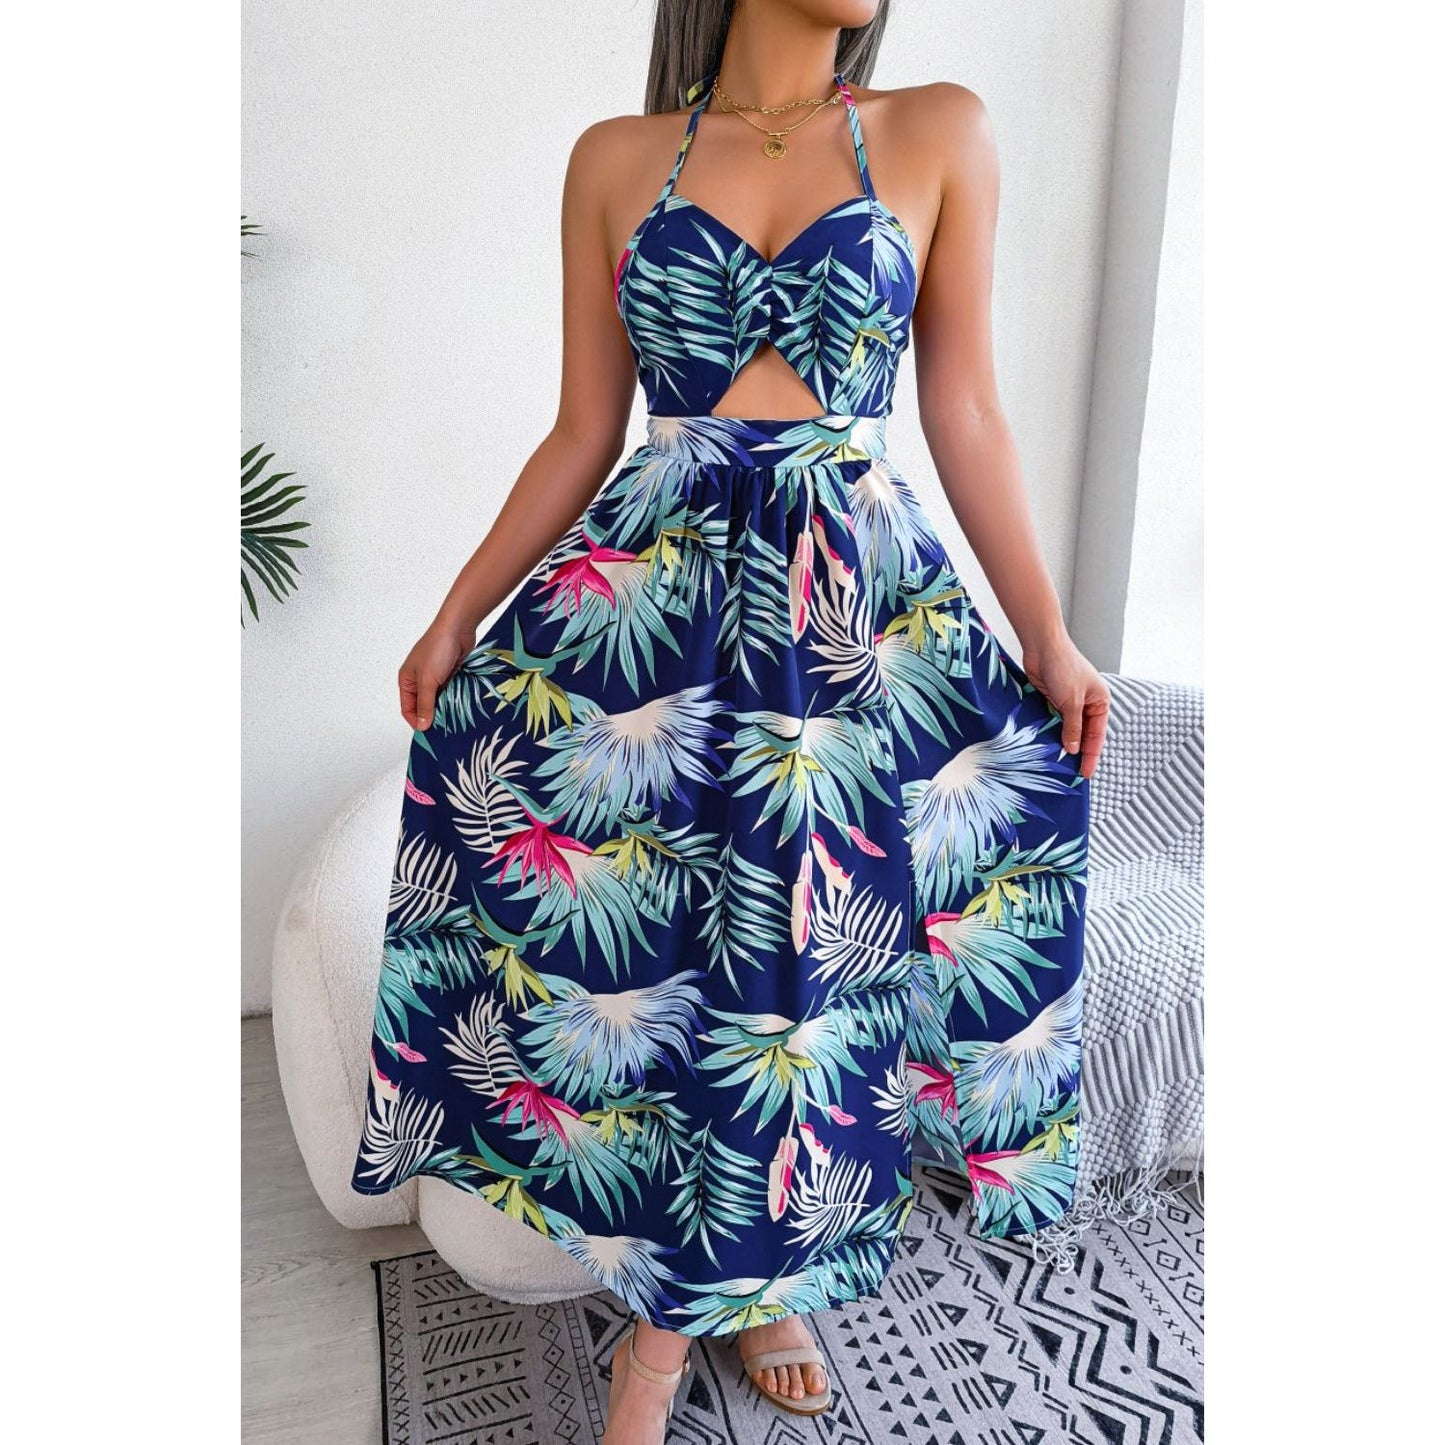 Botanical Print Tied Backless Cutout Slit Dress - TiffanyzKlozet